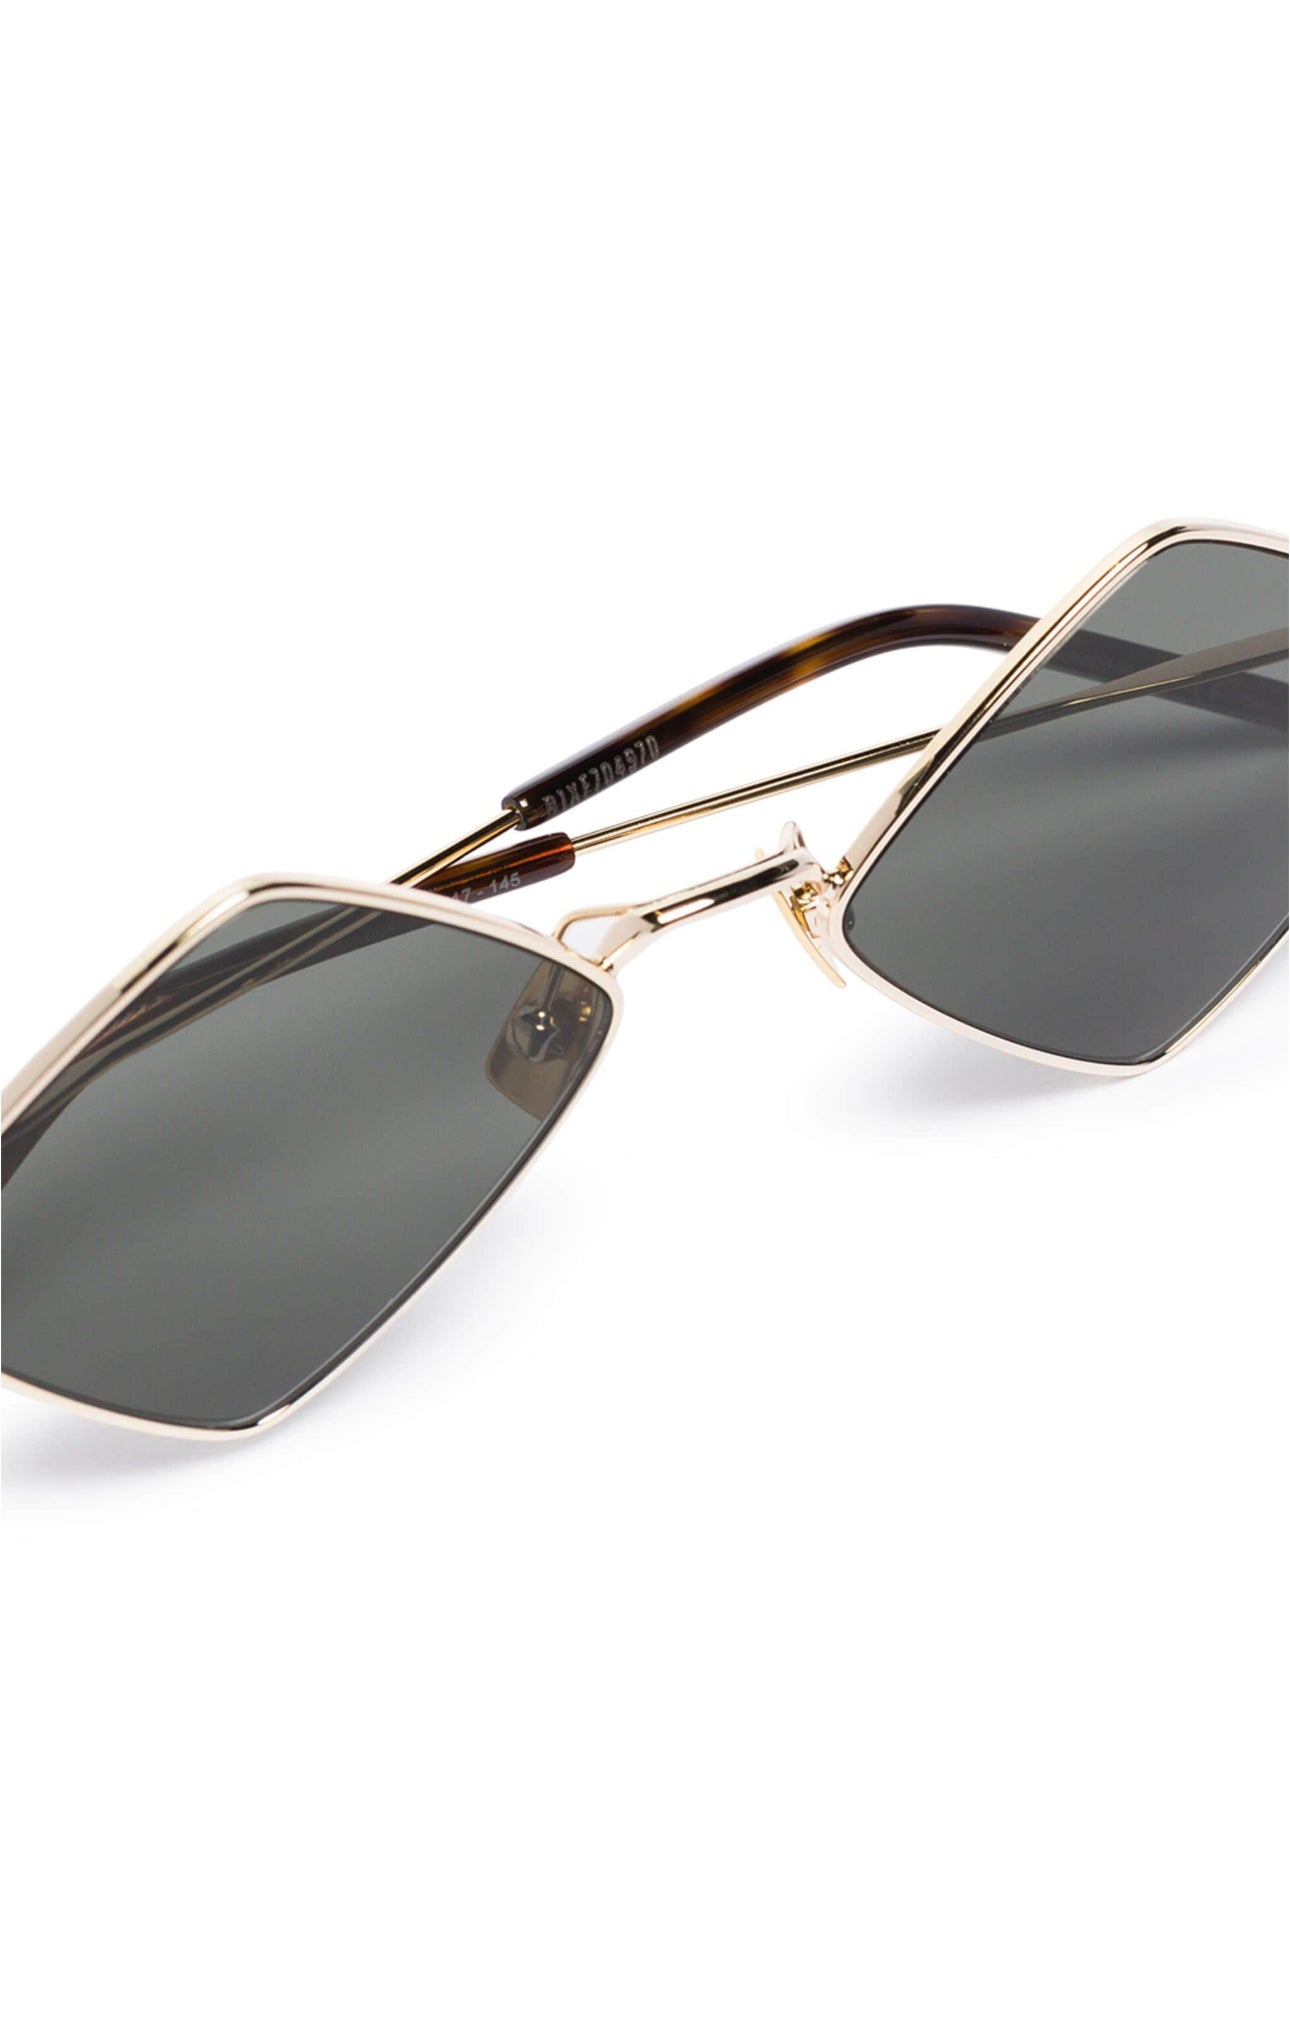 Saint Laurent sunglasses rental